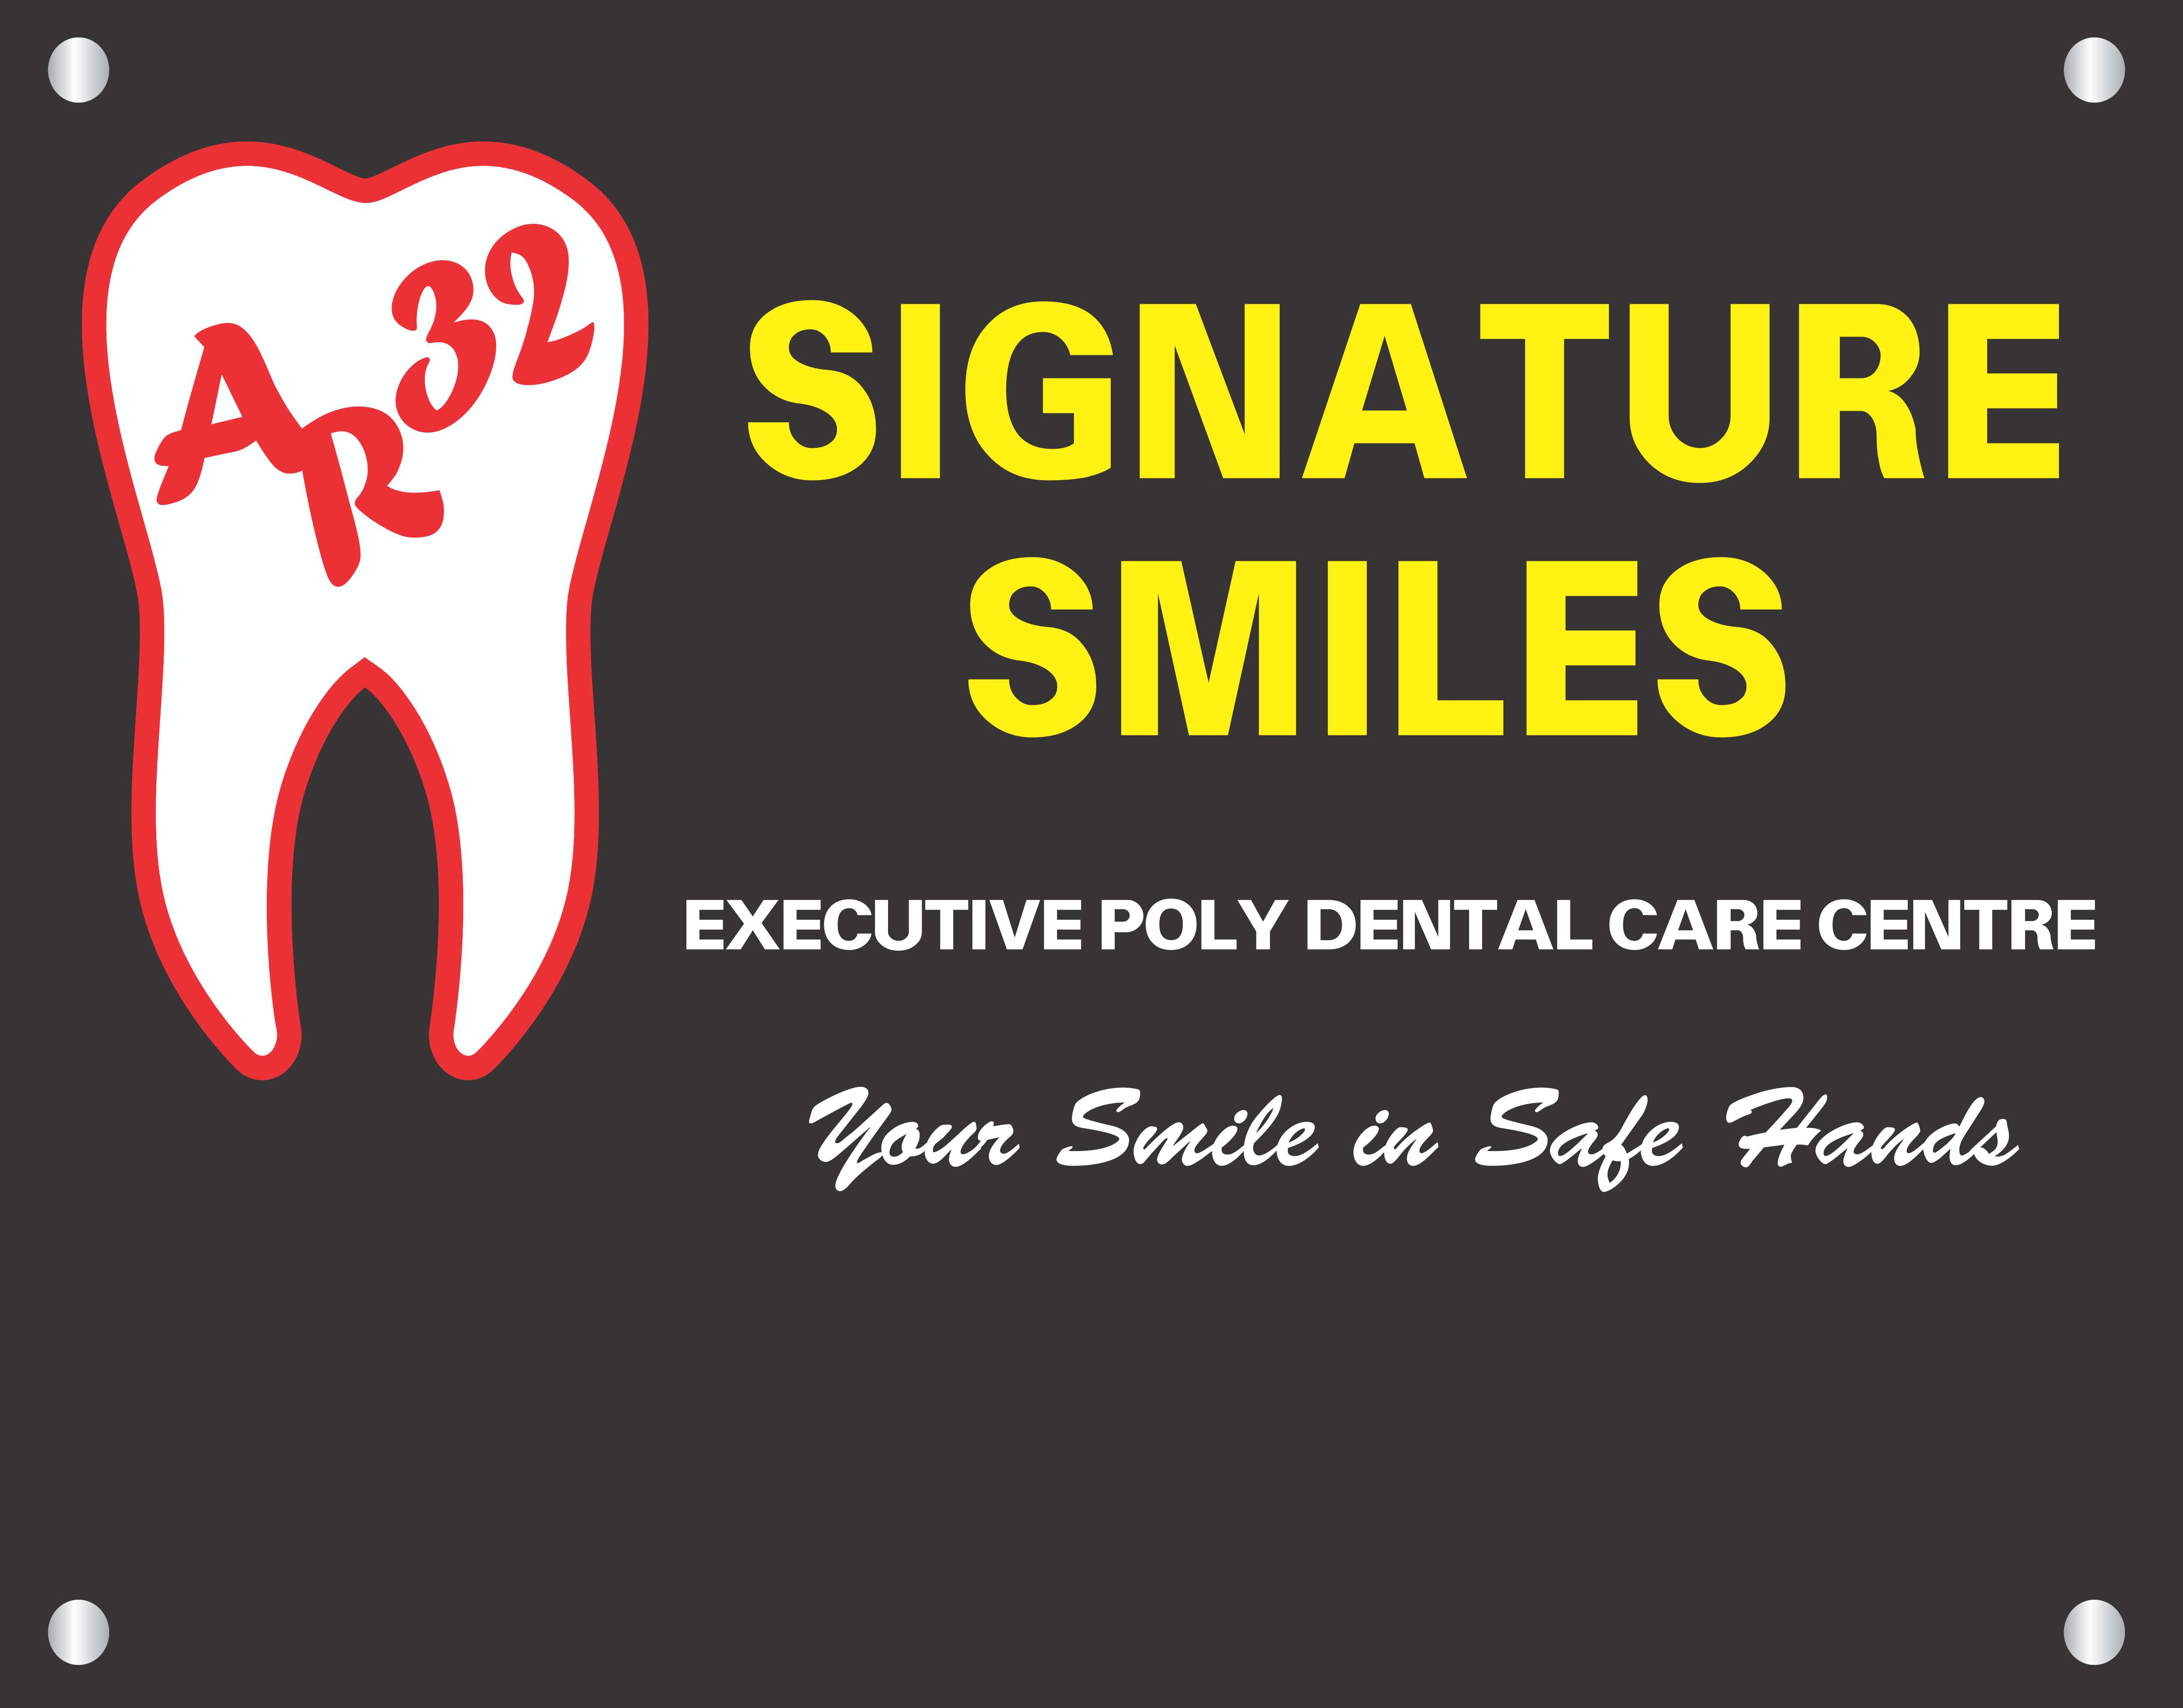 AR 32 Signature Smiles Dental Clinic|Dentists|Medical Services